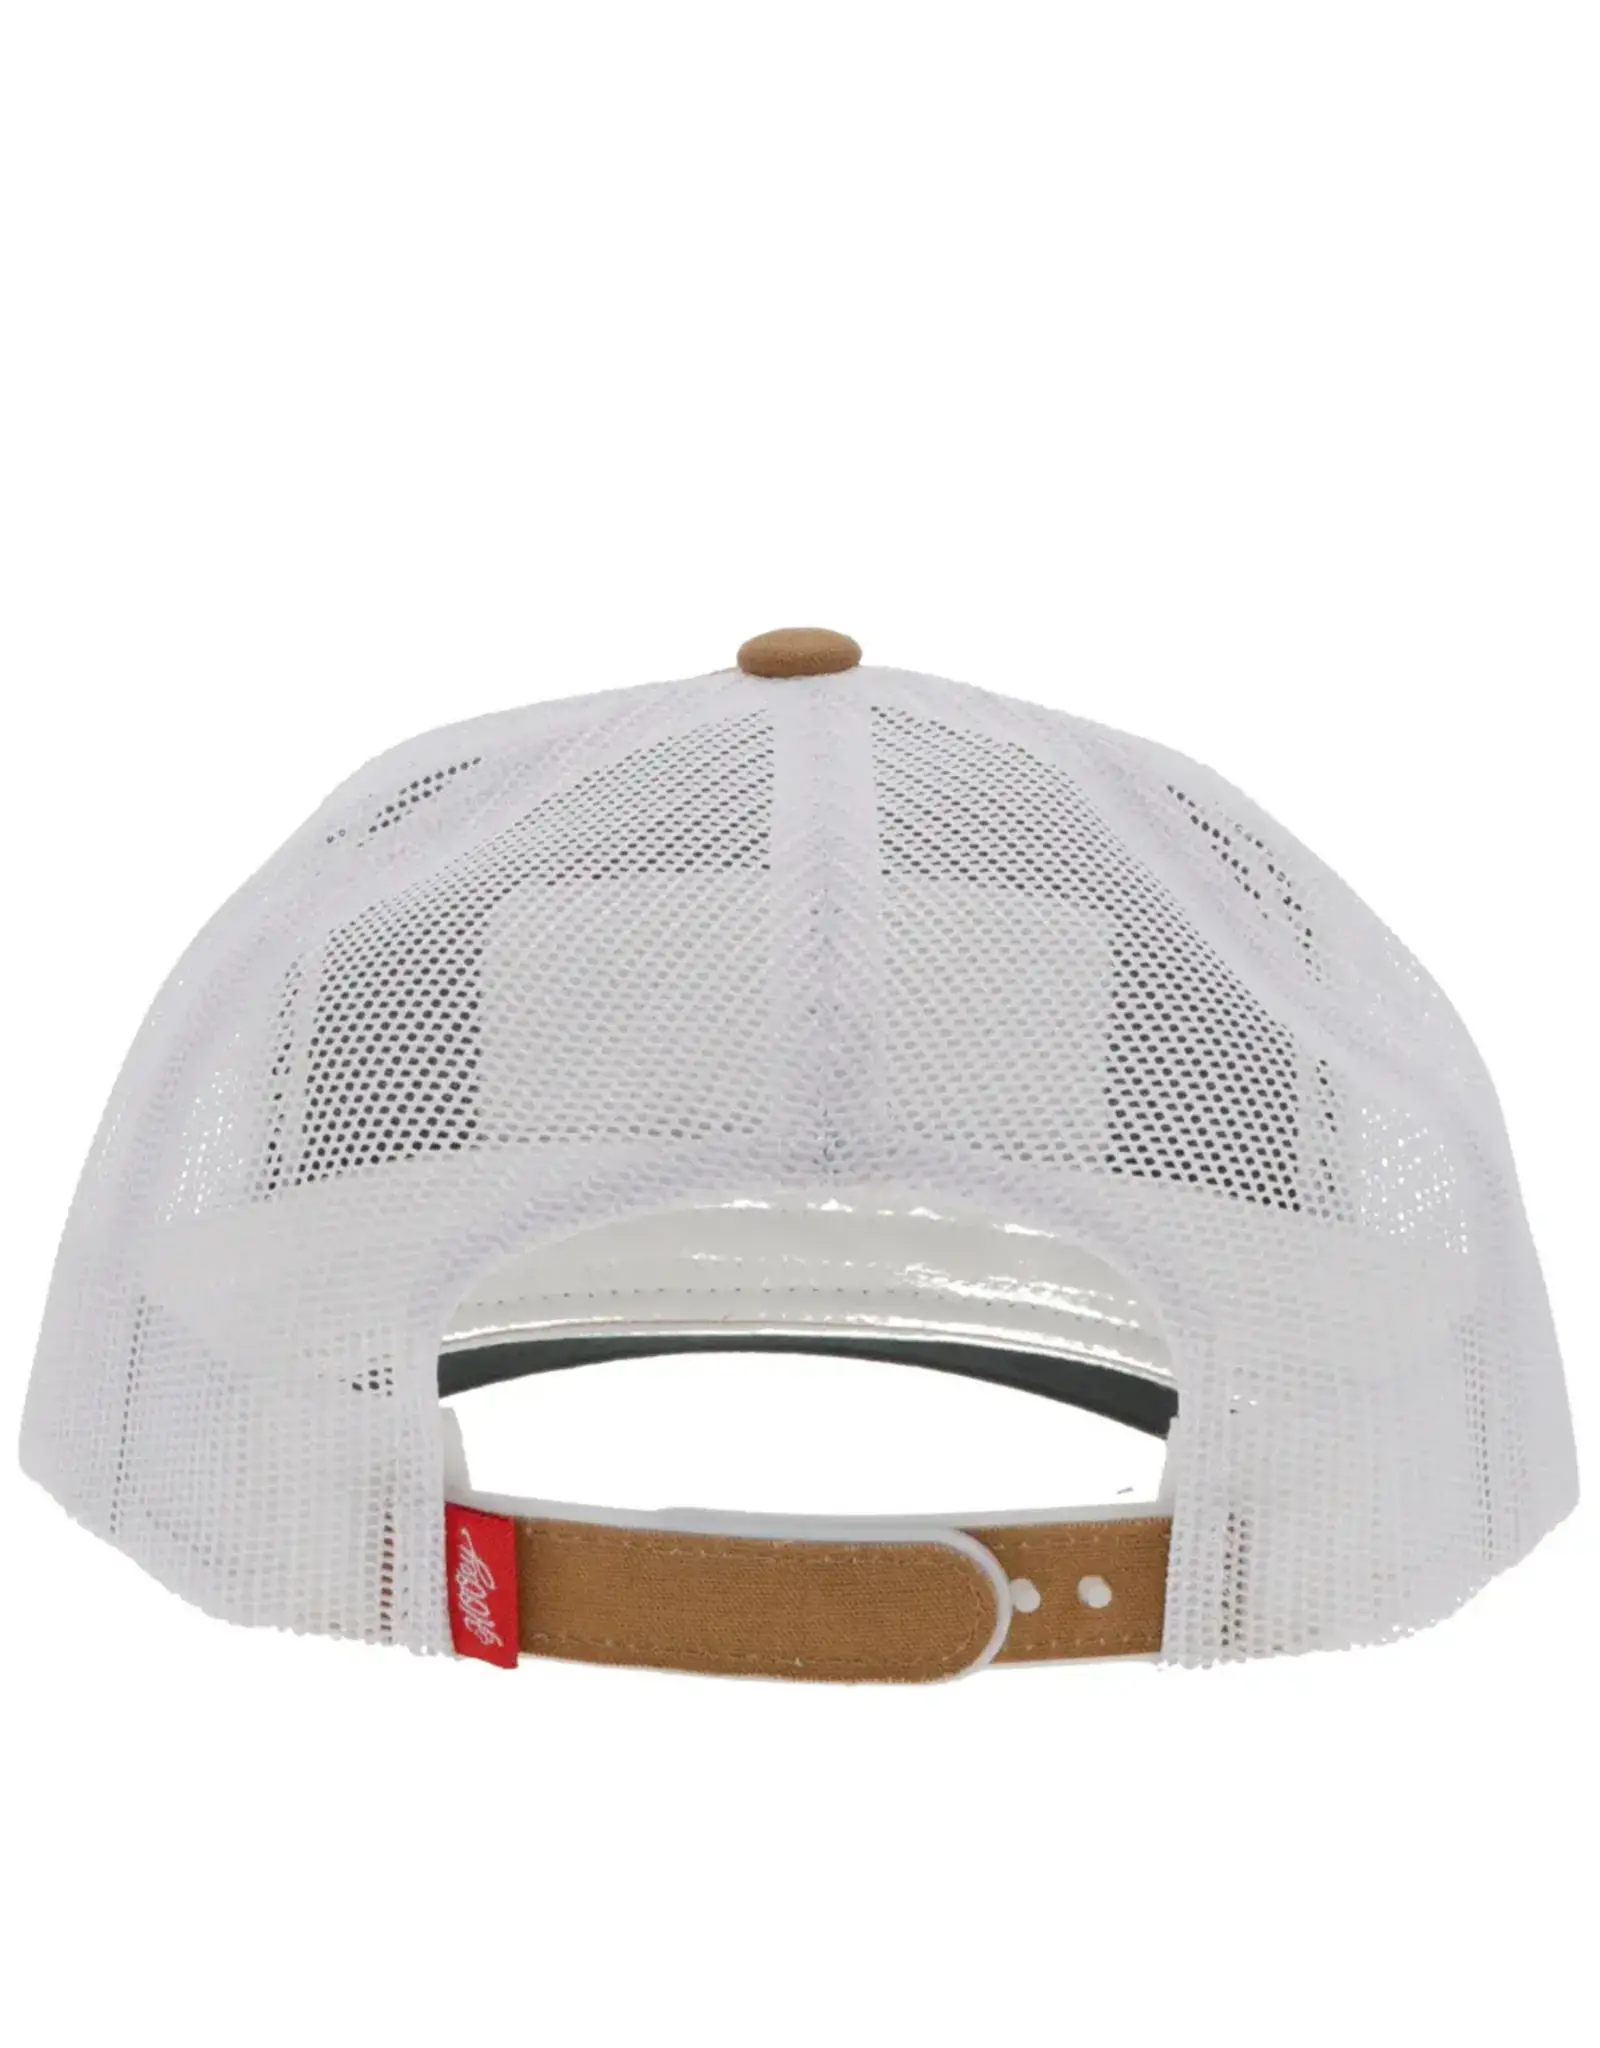 Hooey Brands Hat "Sunset" Tan/White